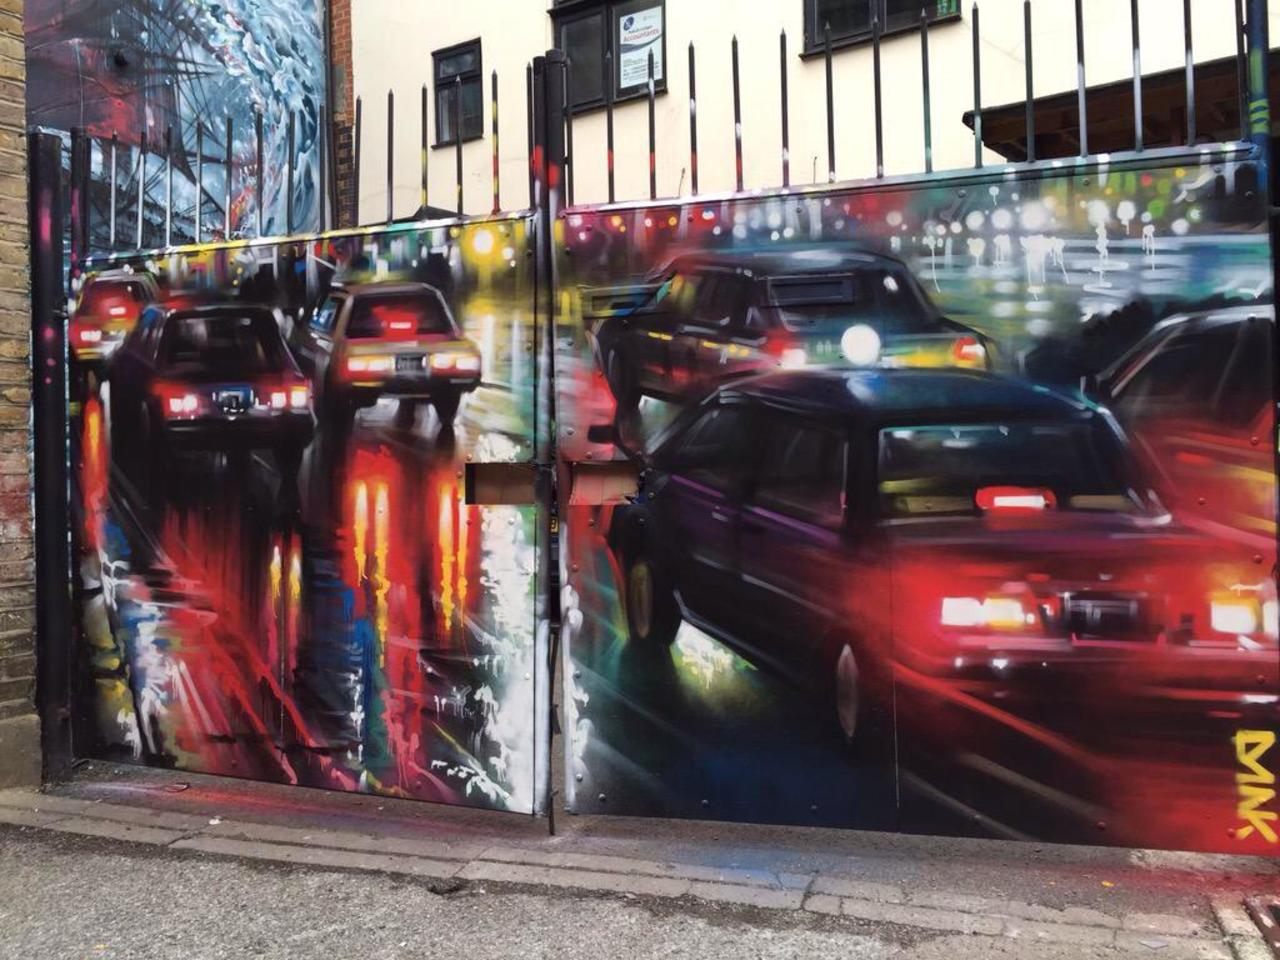 New Street Art by DanKitchener in Brick Lane London 

#art #graffiti #mural #streetart http://t.co/YWVeeuHsaI